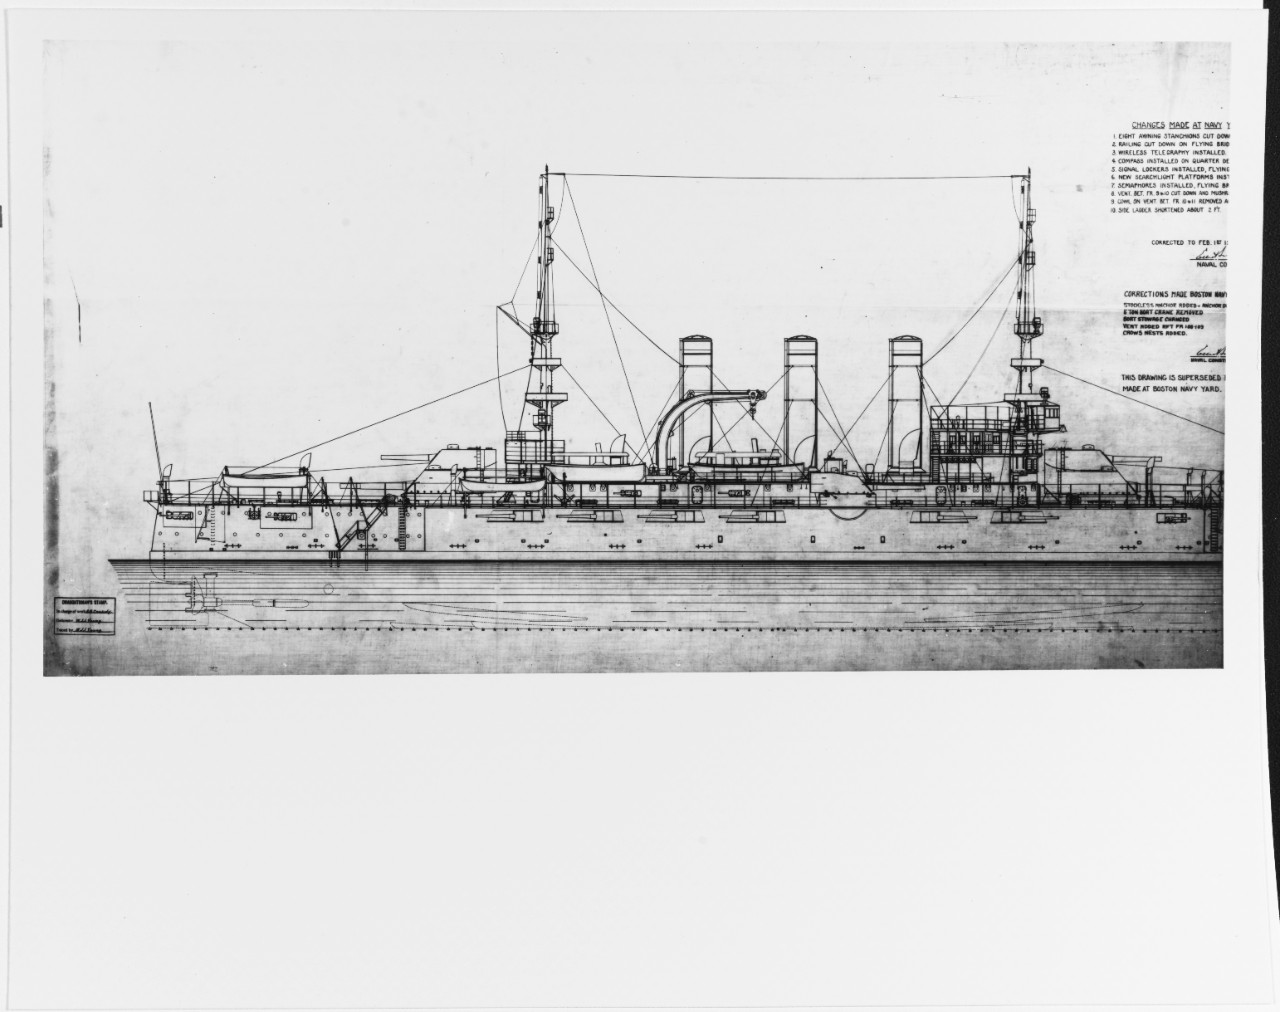 USS NEW JERSEY (BB-16)